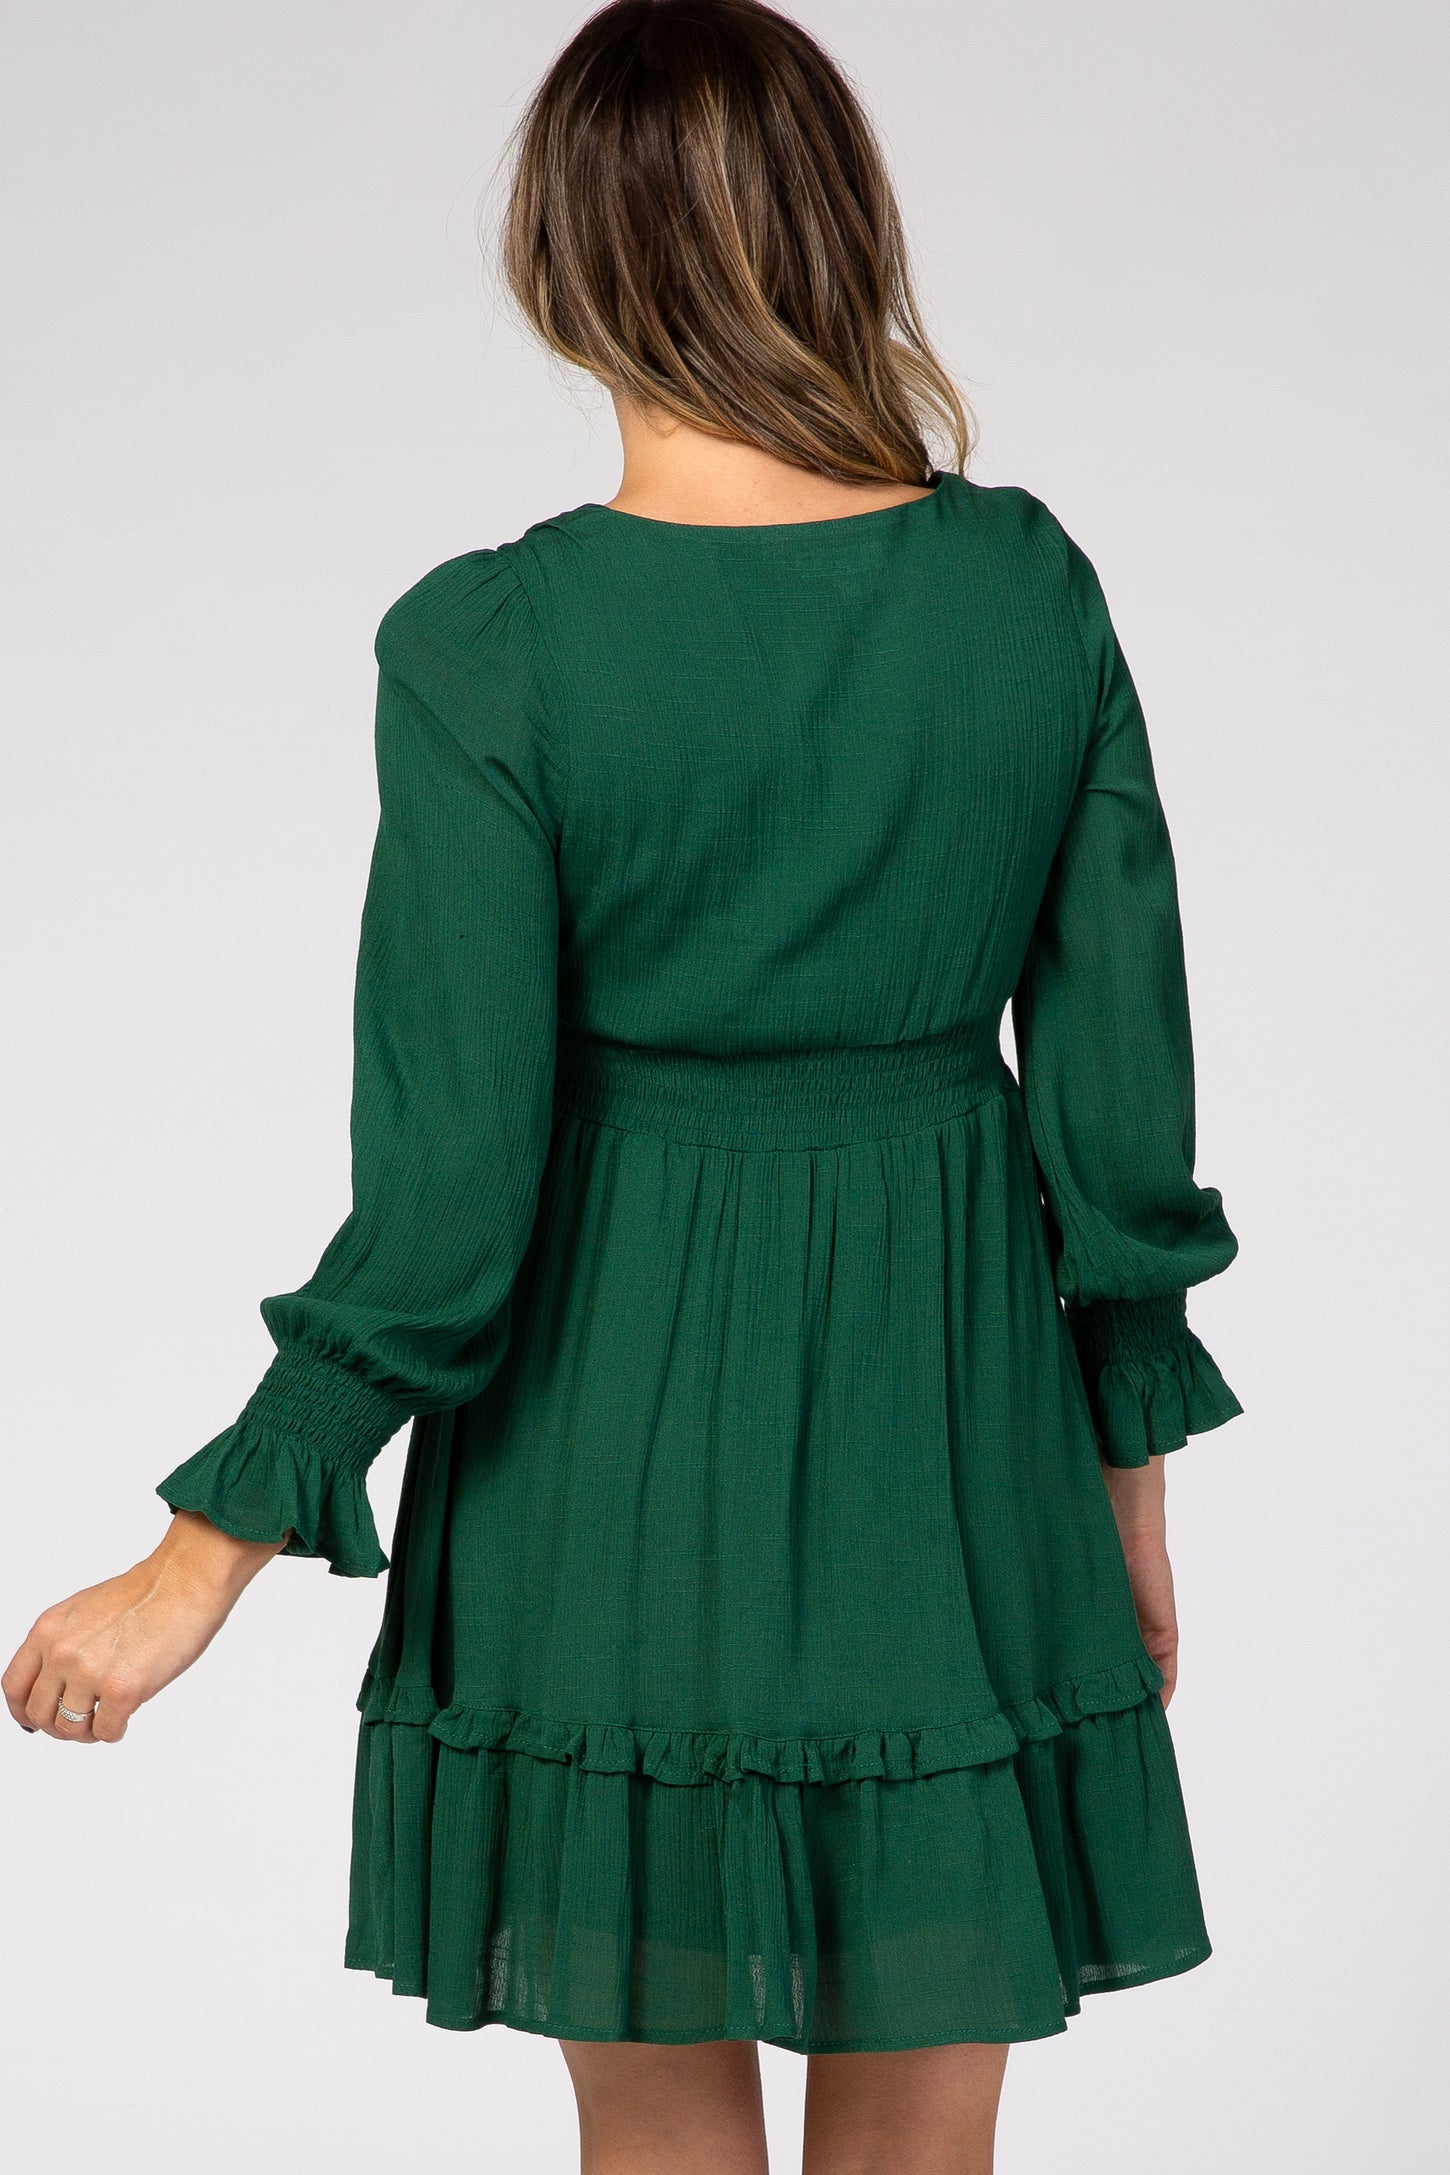 Green Tie Front Ruffle Accent Mini Dress